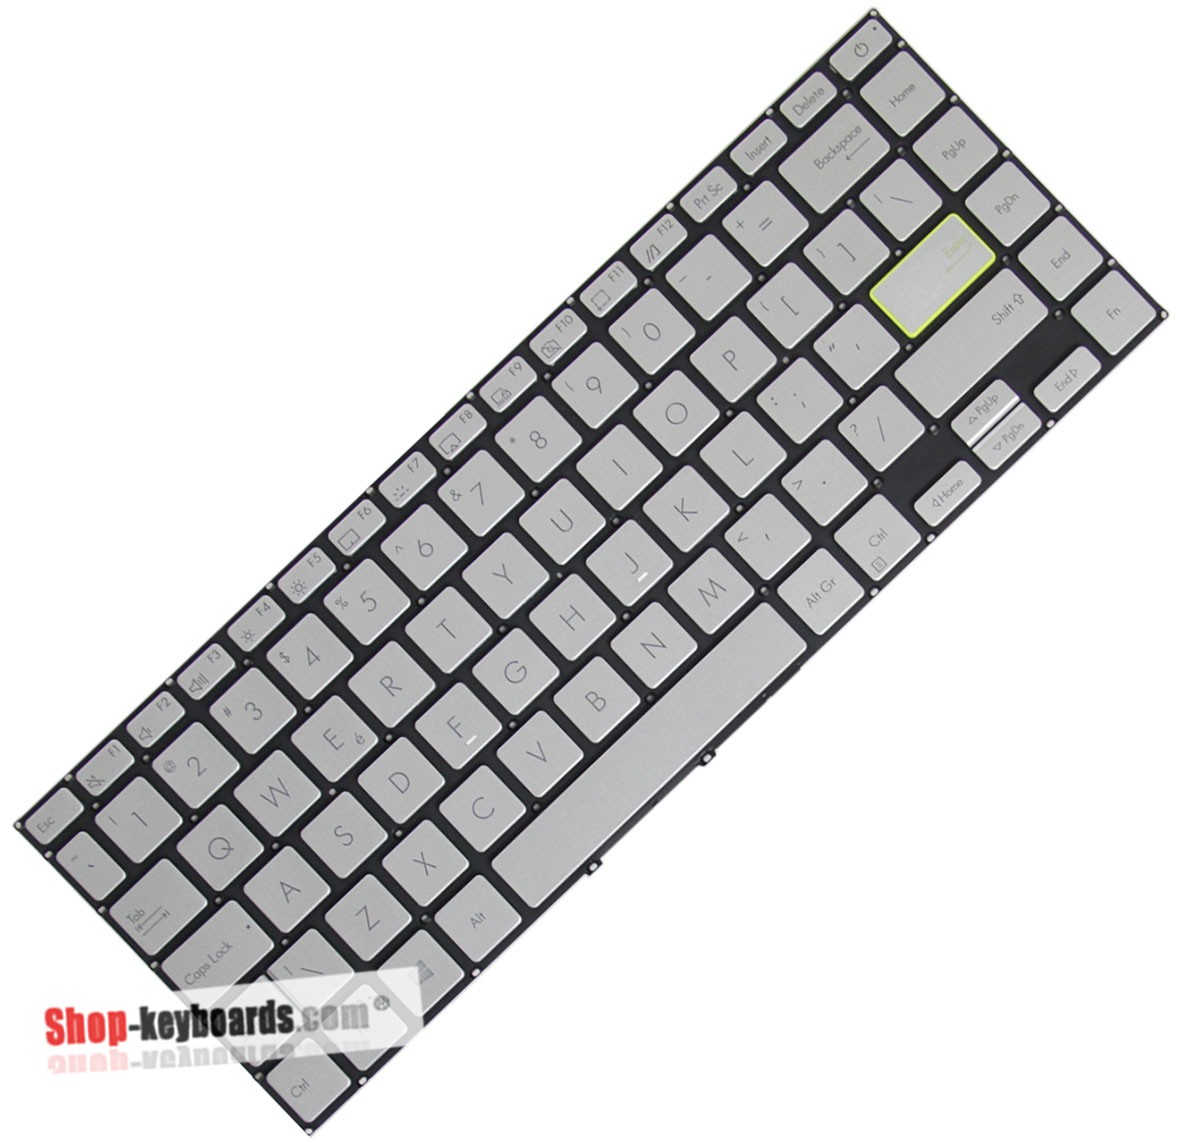 Asus TM420UA Keyboard replacement